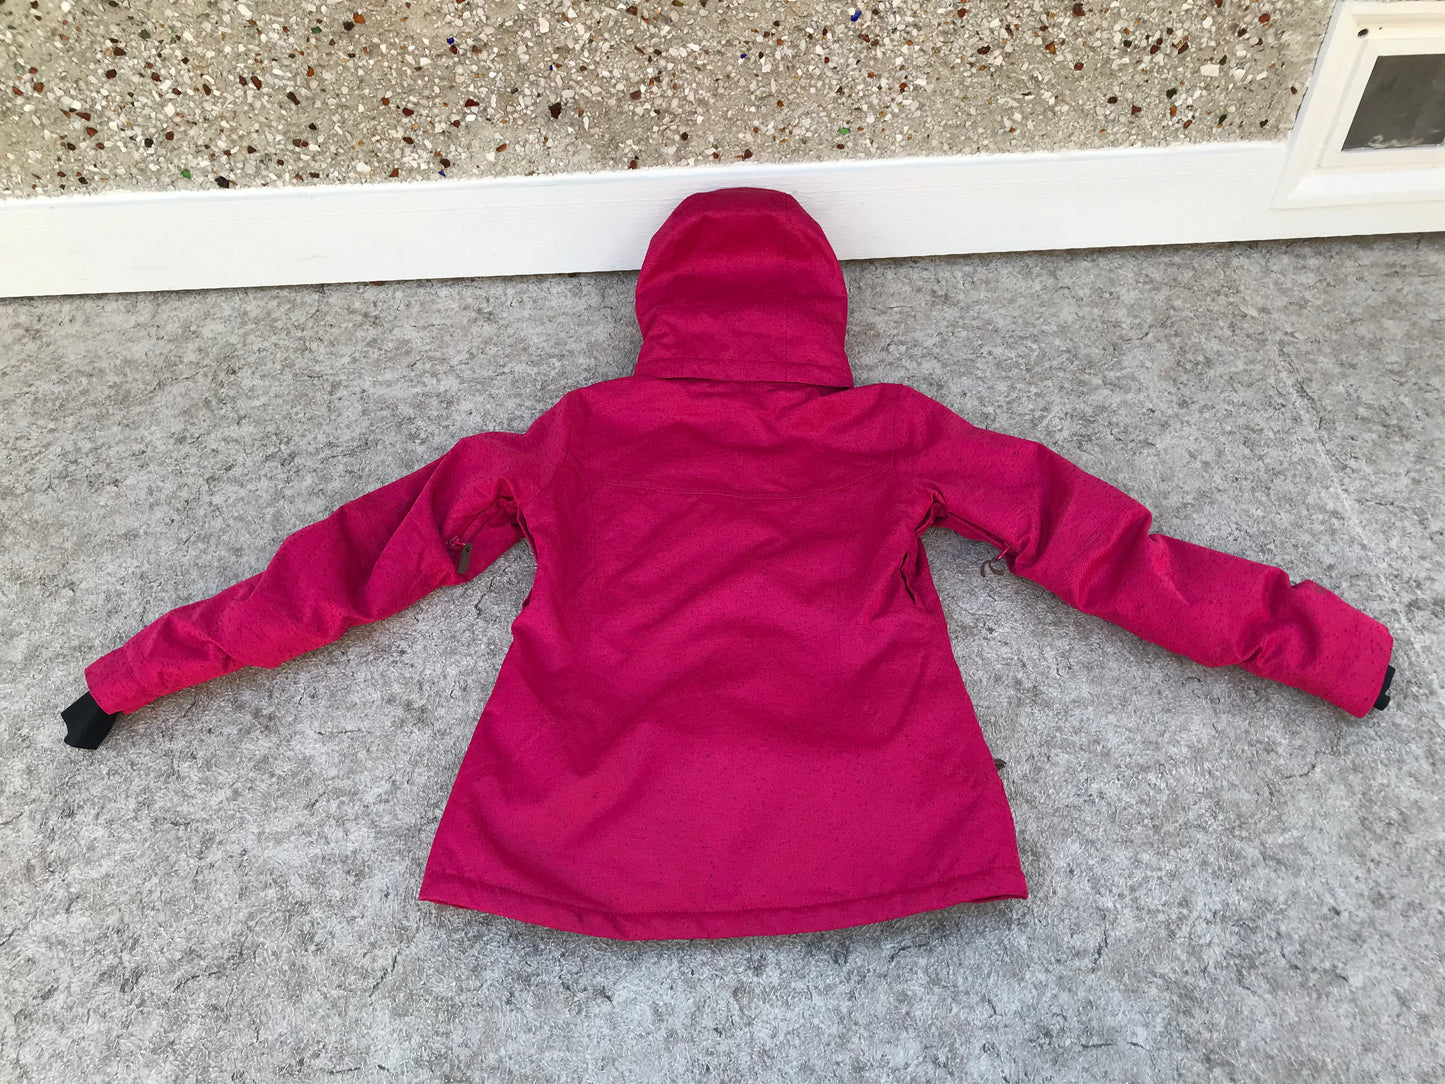 Winter Coat Child Size 12 Firefly Raspberry With Snow Belt Faux Fur Trim New Demo Model